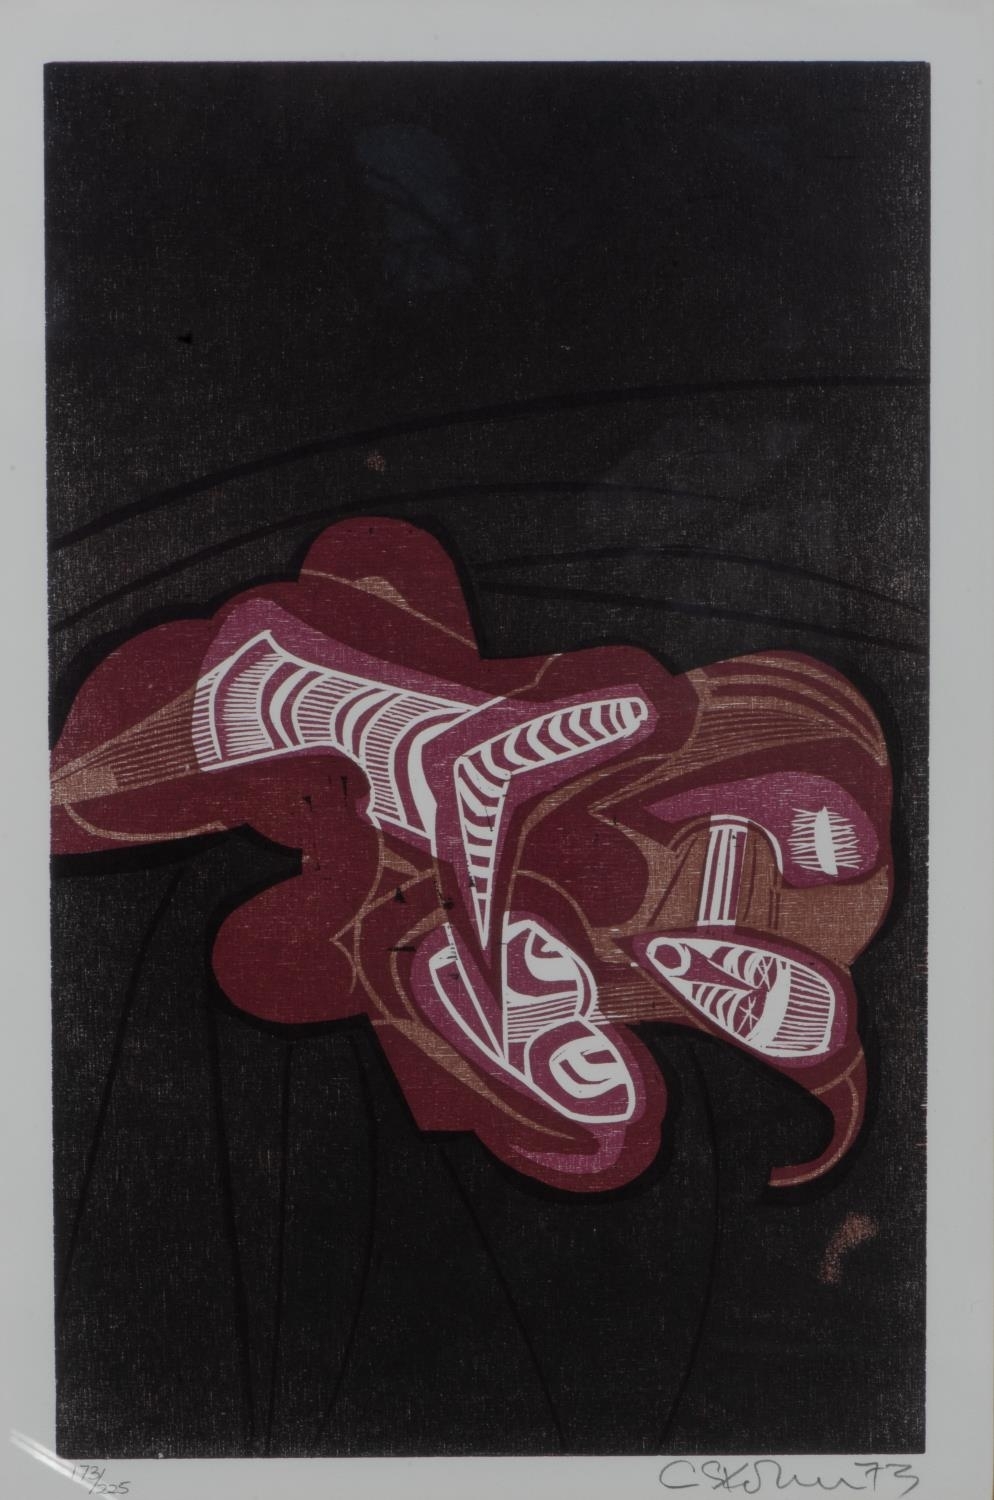 SENZANGKONA SEDUCES NANDI by Cecil Skotnes, dated 73